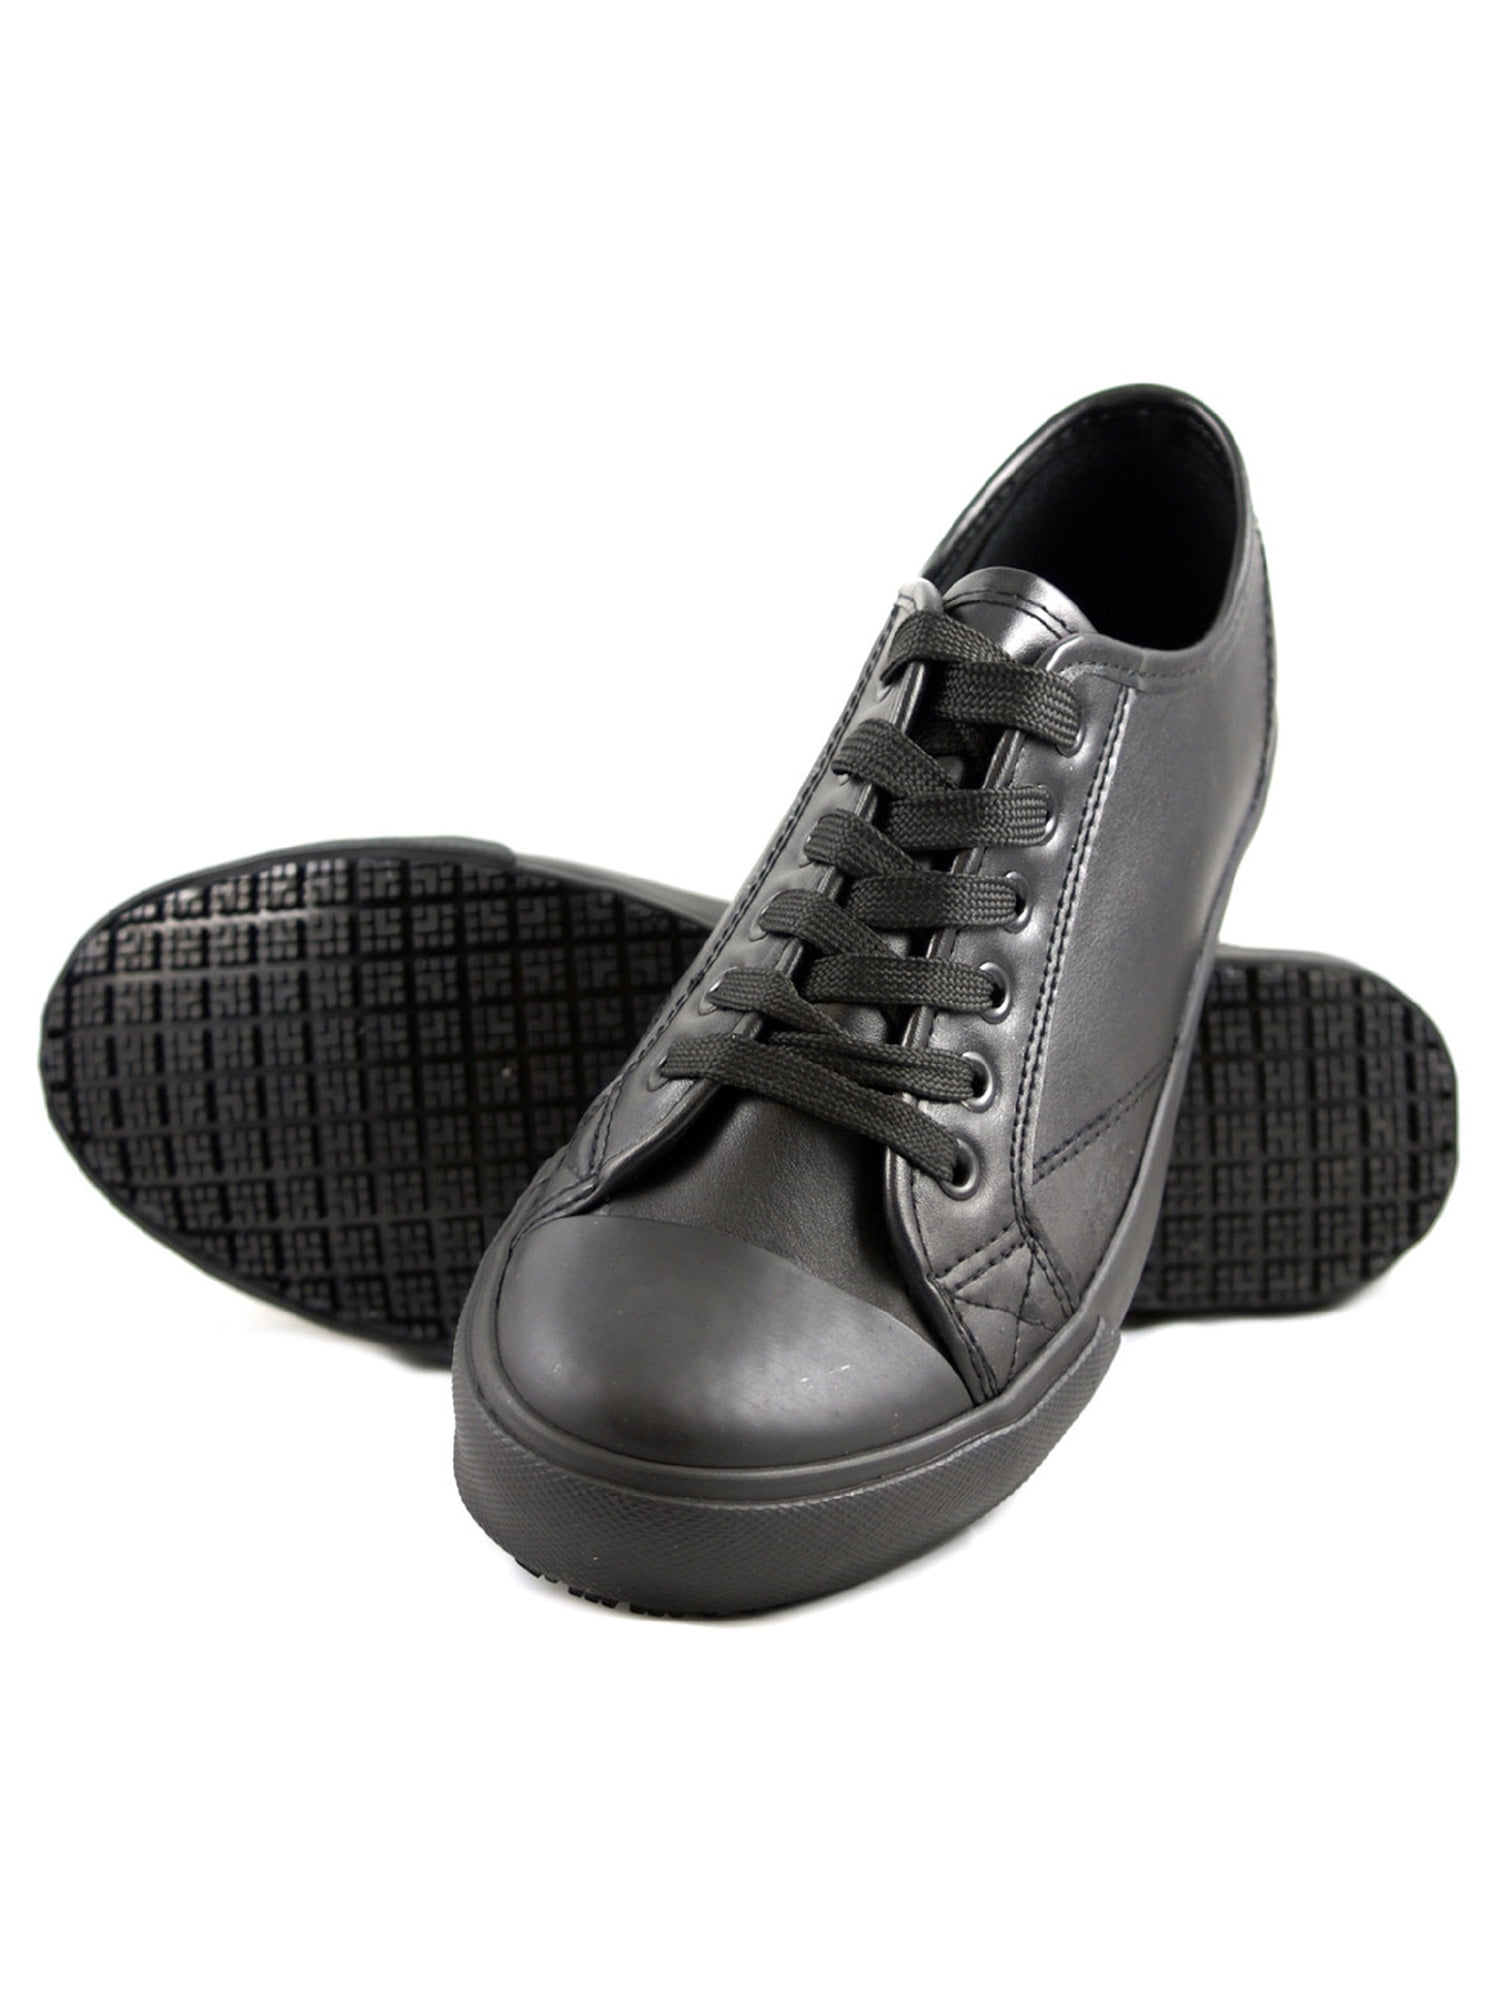 walmart ladies slip on shoes